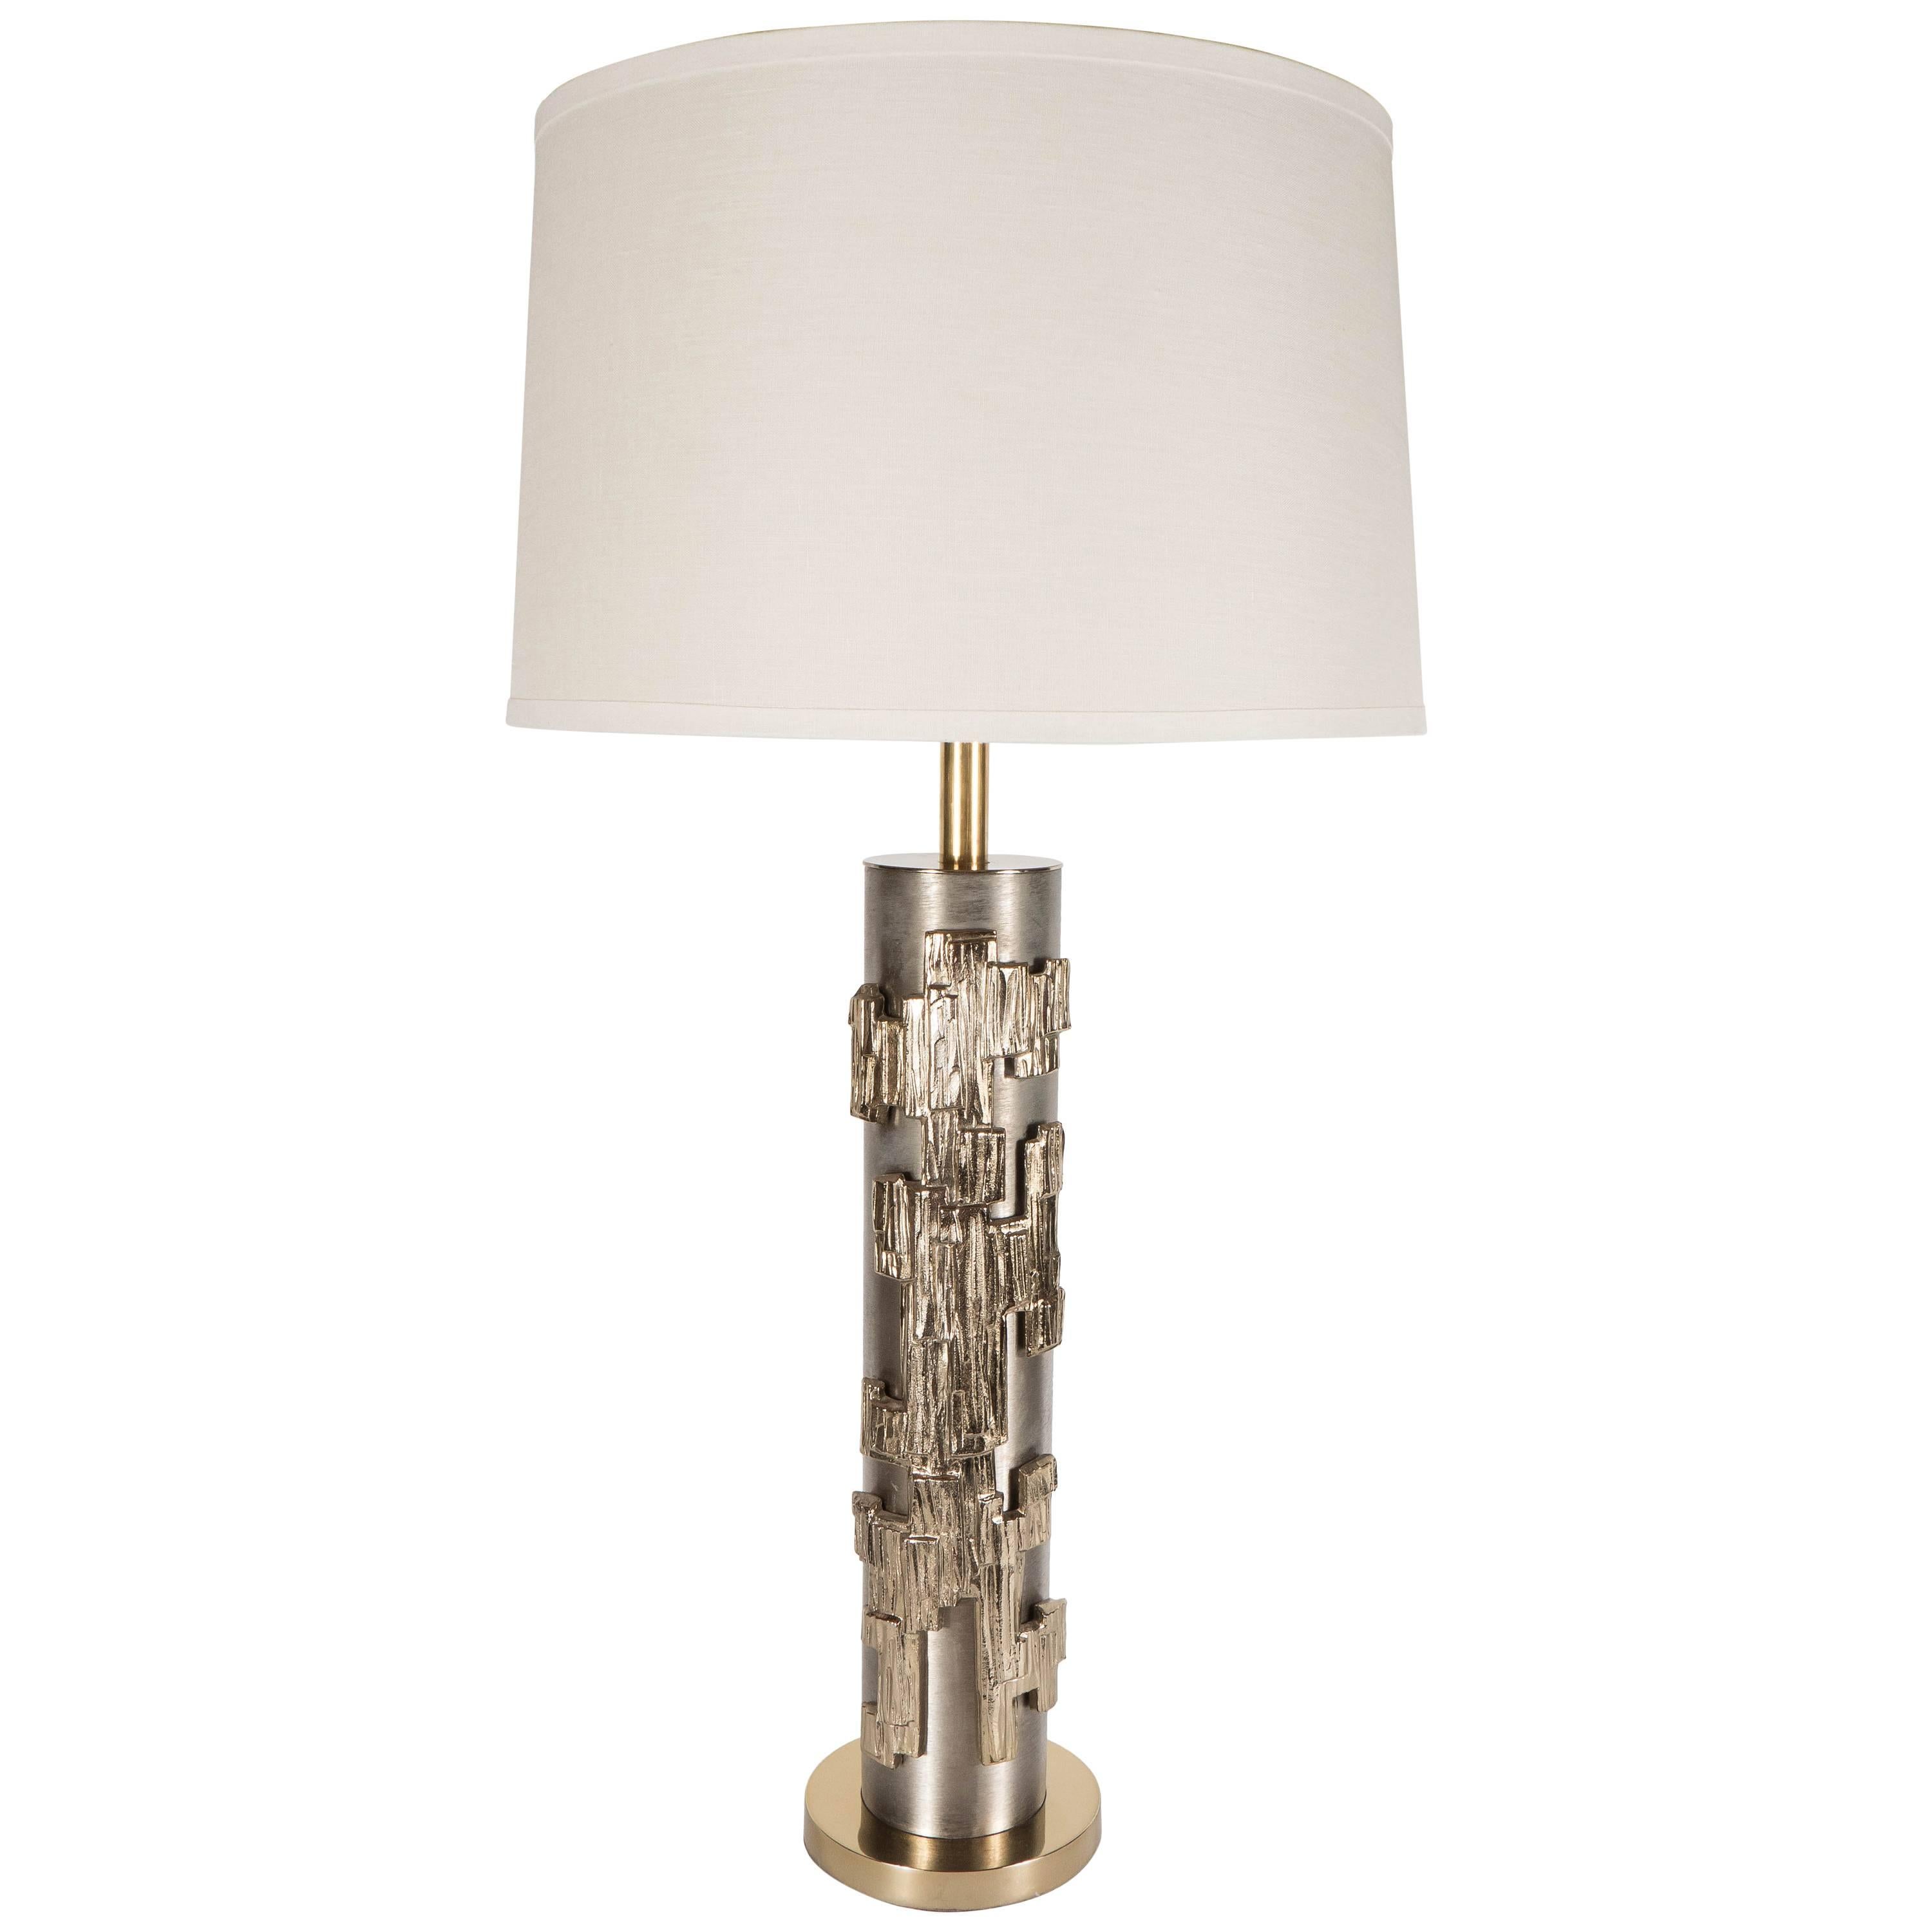 Laurel Lamp Co. Brutalist Brushed Steel Table Lamp w/ Striated Brass Appliqués